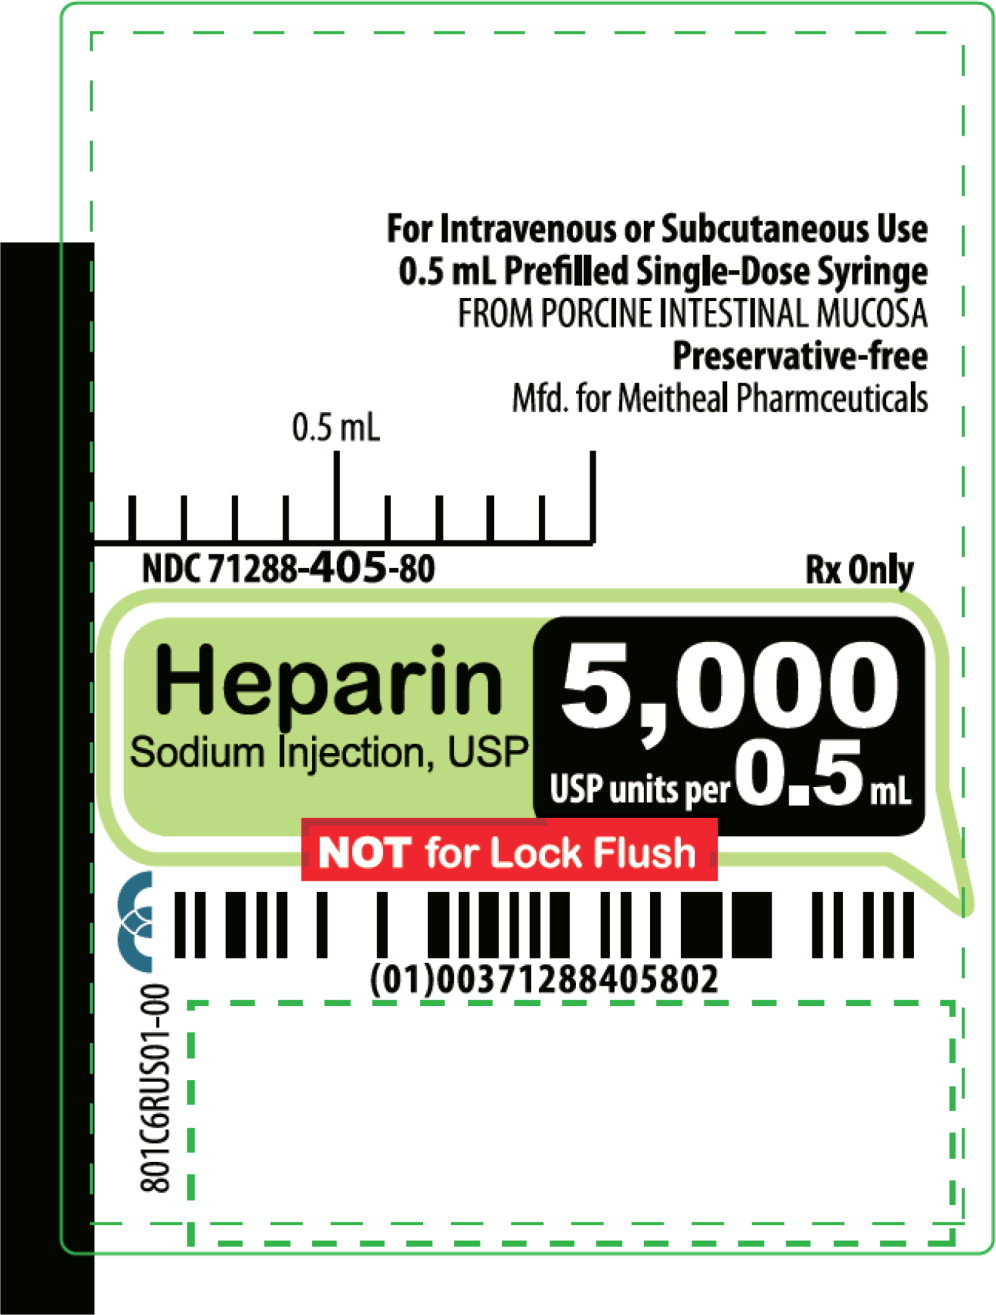 Principal Display Panel – Heparin Sodium Injection, USP 5,000 USP units per 0.5 mL Syringe Label
